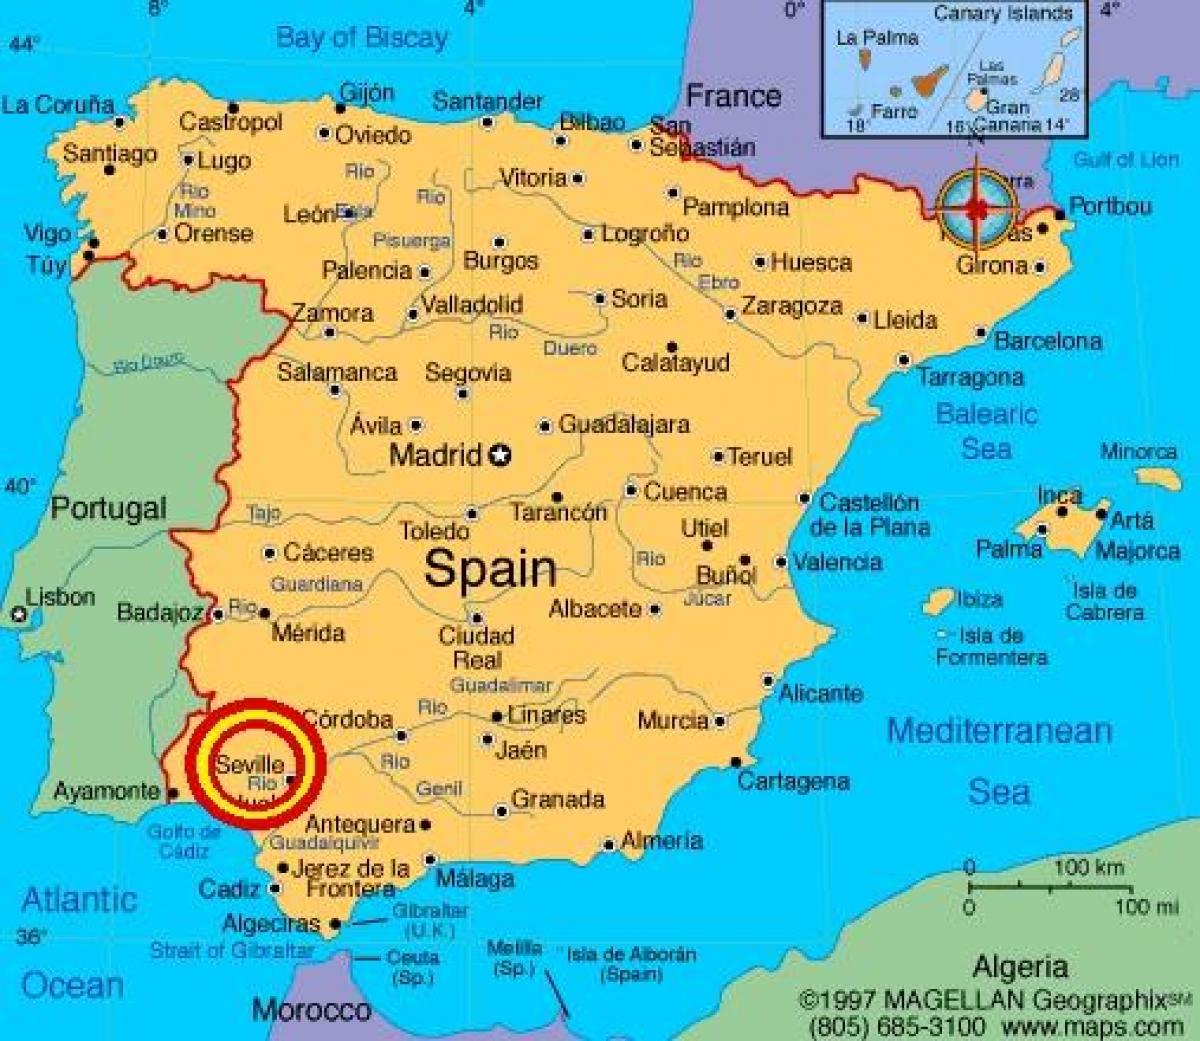 Sevilla шпанија мапа